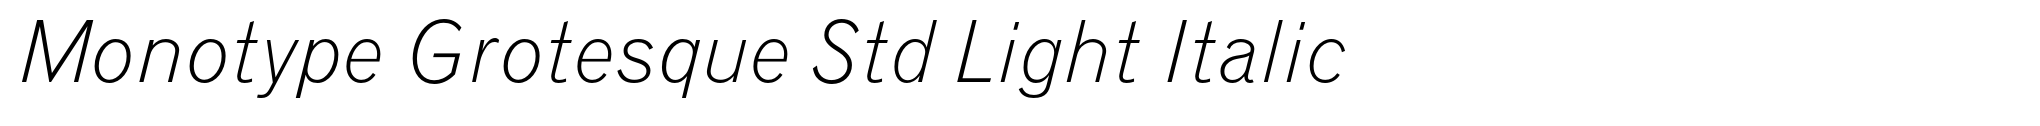 Monotype Grotesque Std Light Italic image